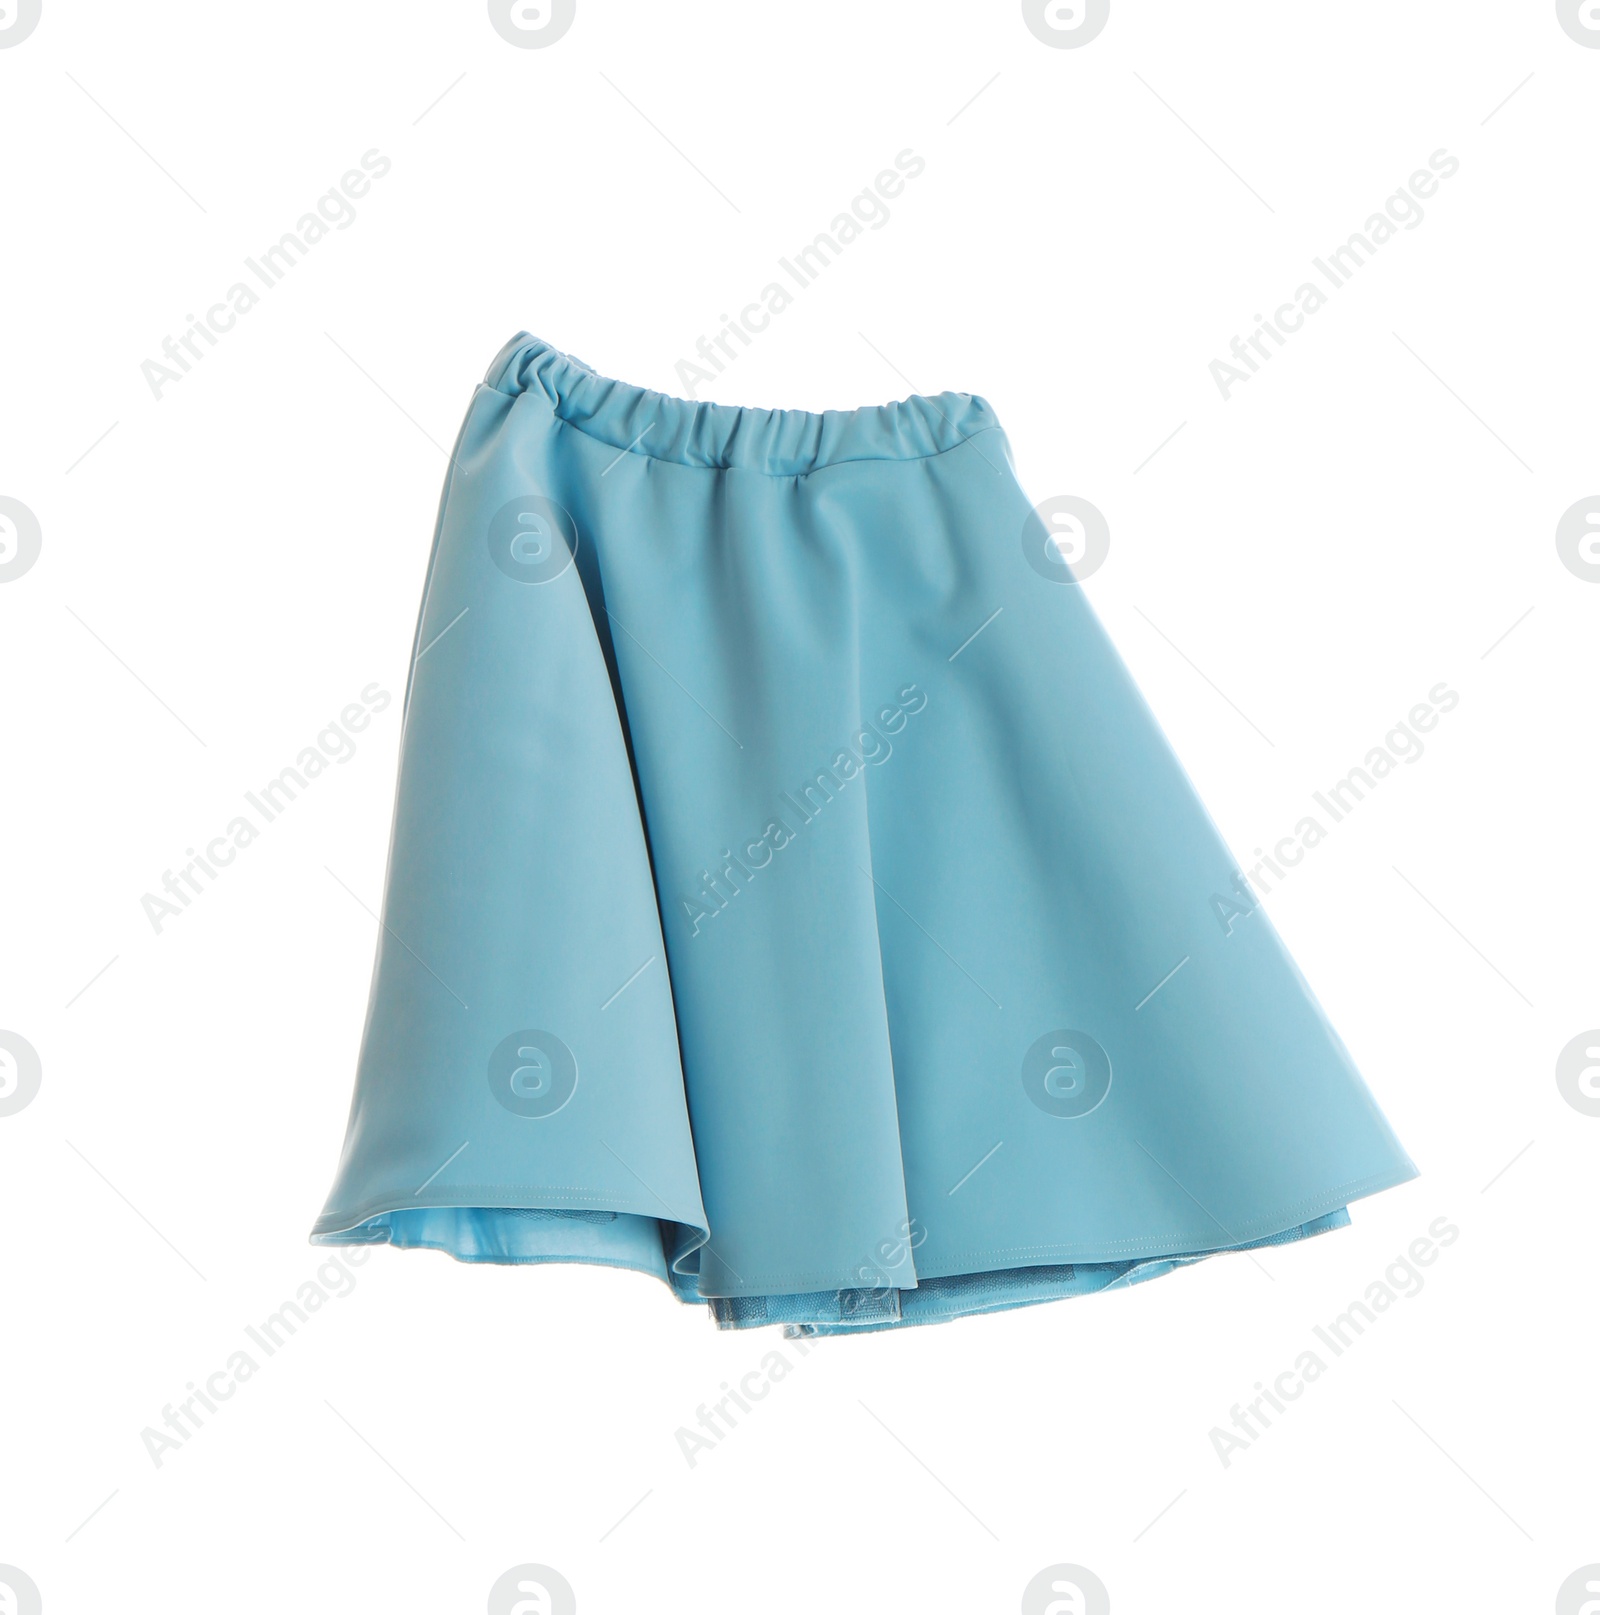 Photo of Light blue skirt isolated on white. Stylish clothes